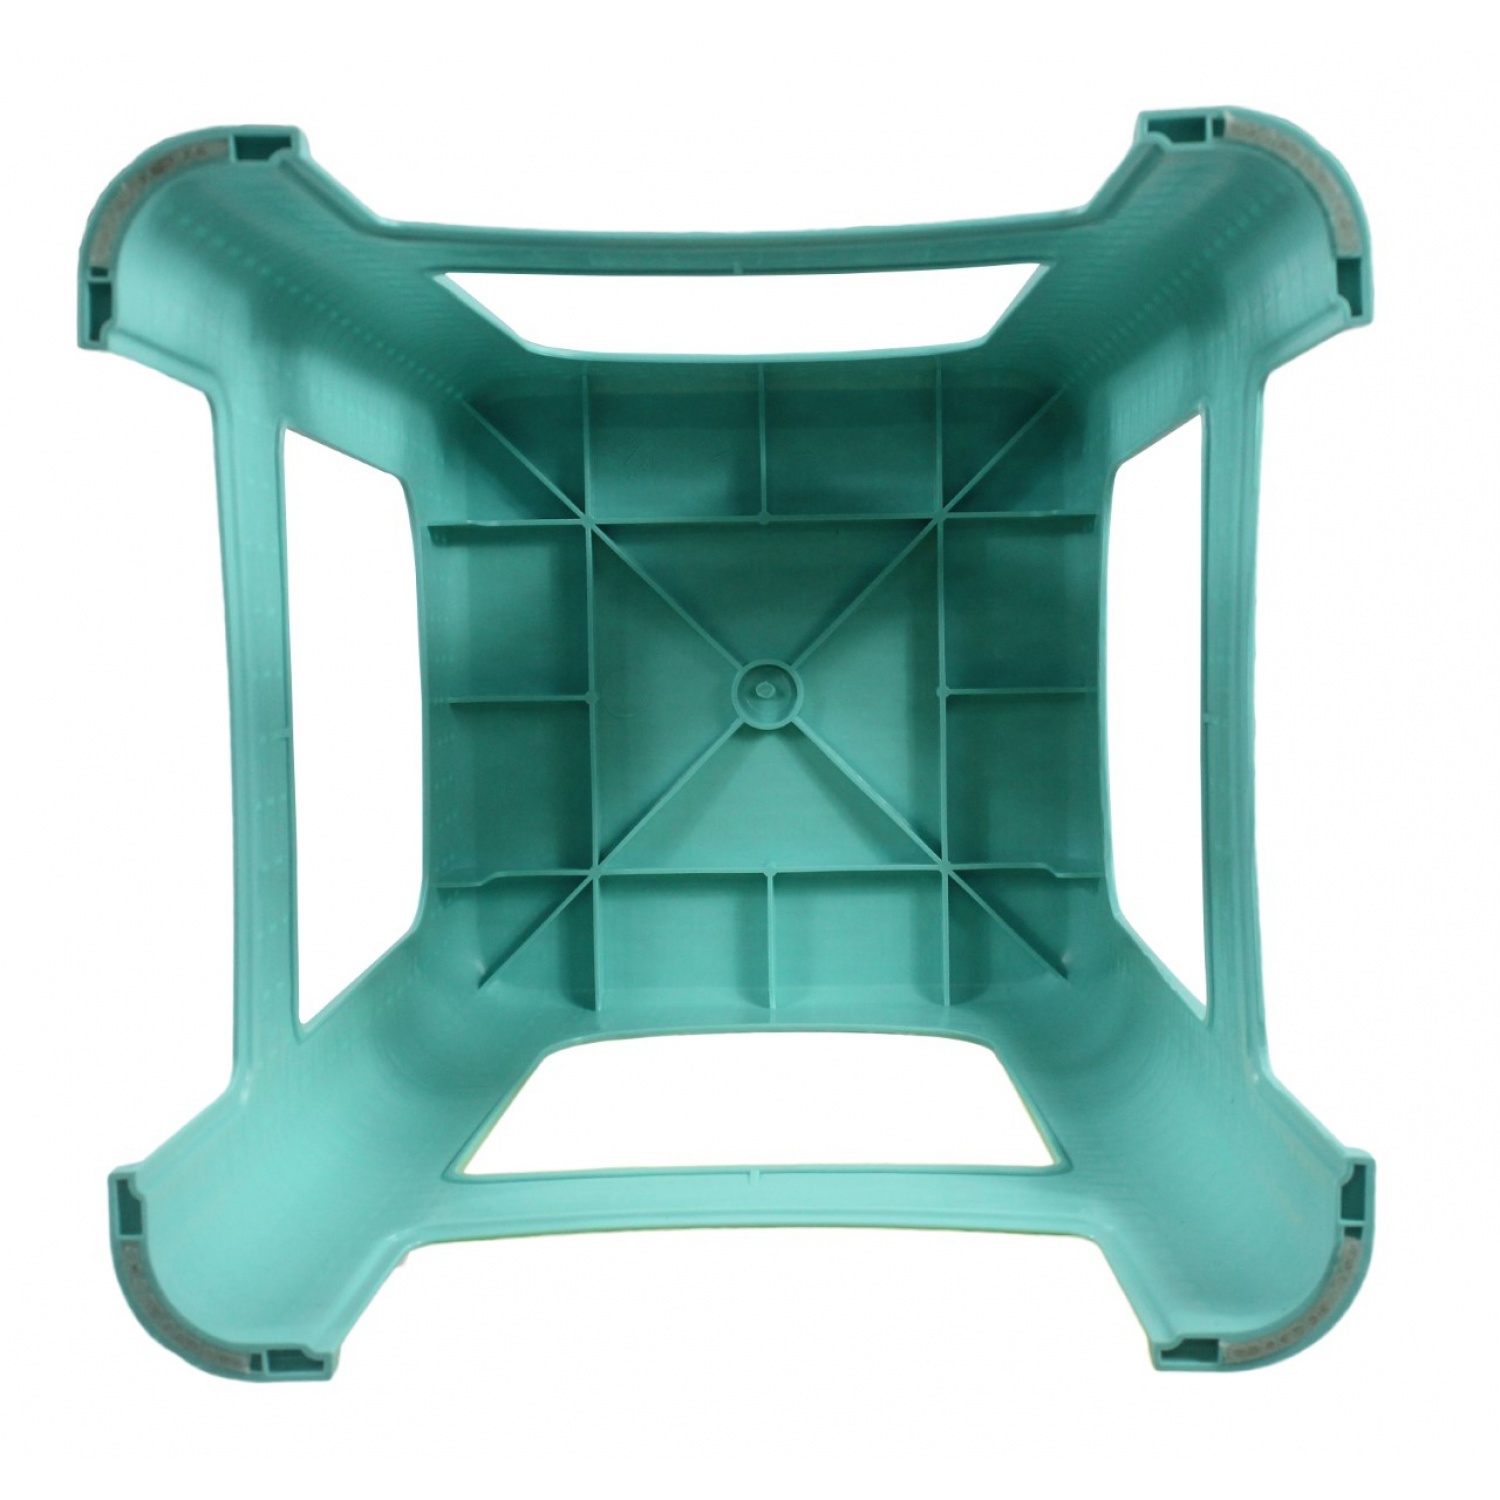 SUMMER SET เก้าอี้พลาสติกทรงเหลี่ยม ลายหวาย รุ่นแบมบู FT-232/A สีฟ้า